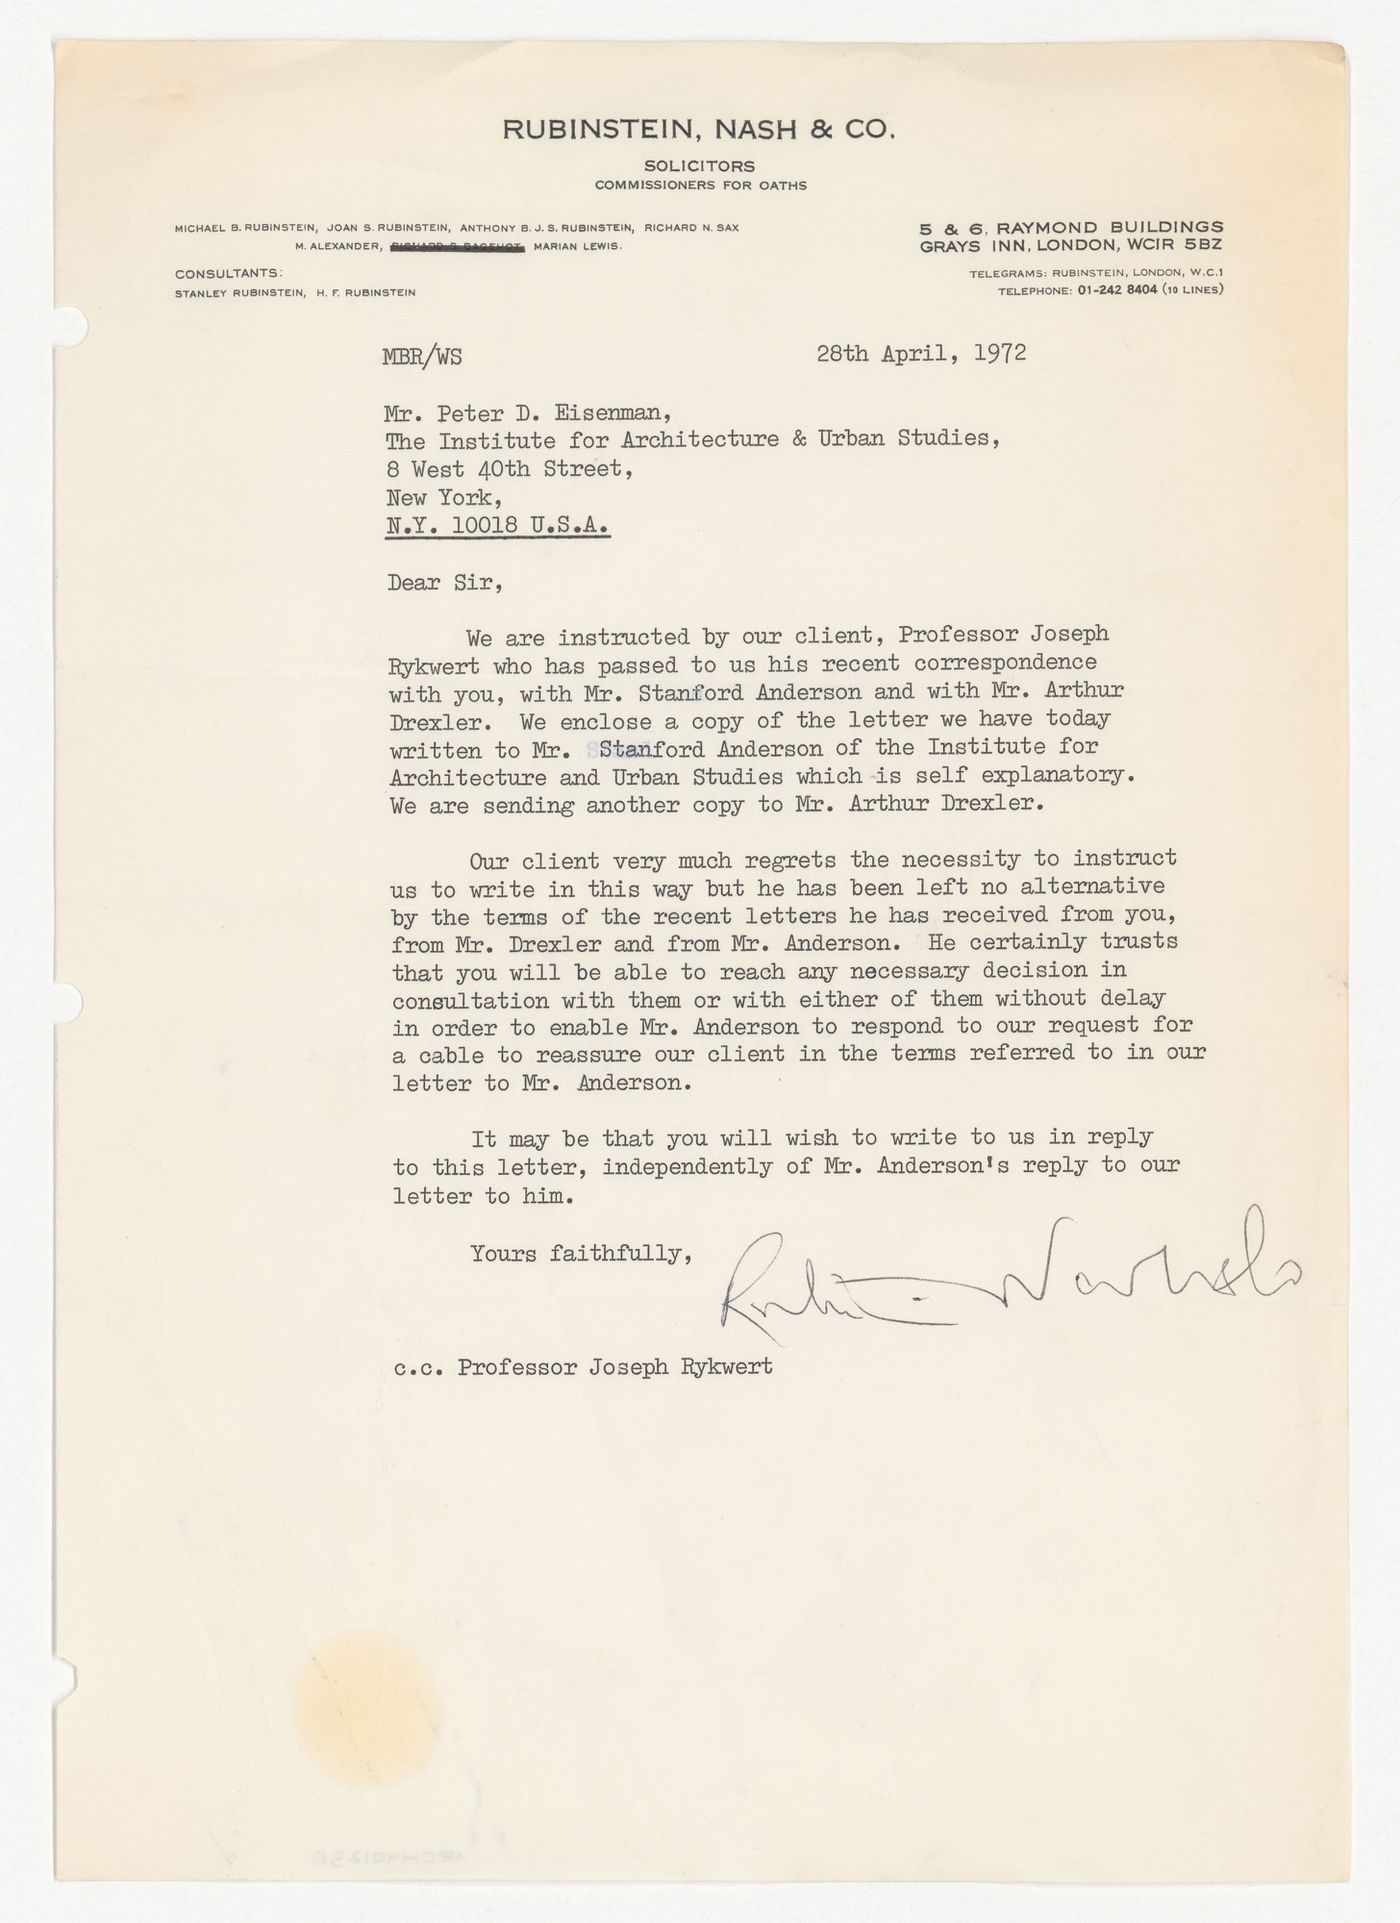 Letter from the firm Rubinstein, Nash & Co. to Peter D. Eisenman about guest lecturer Professor Joseph Rykwert